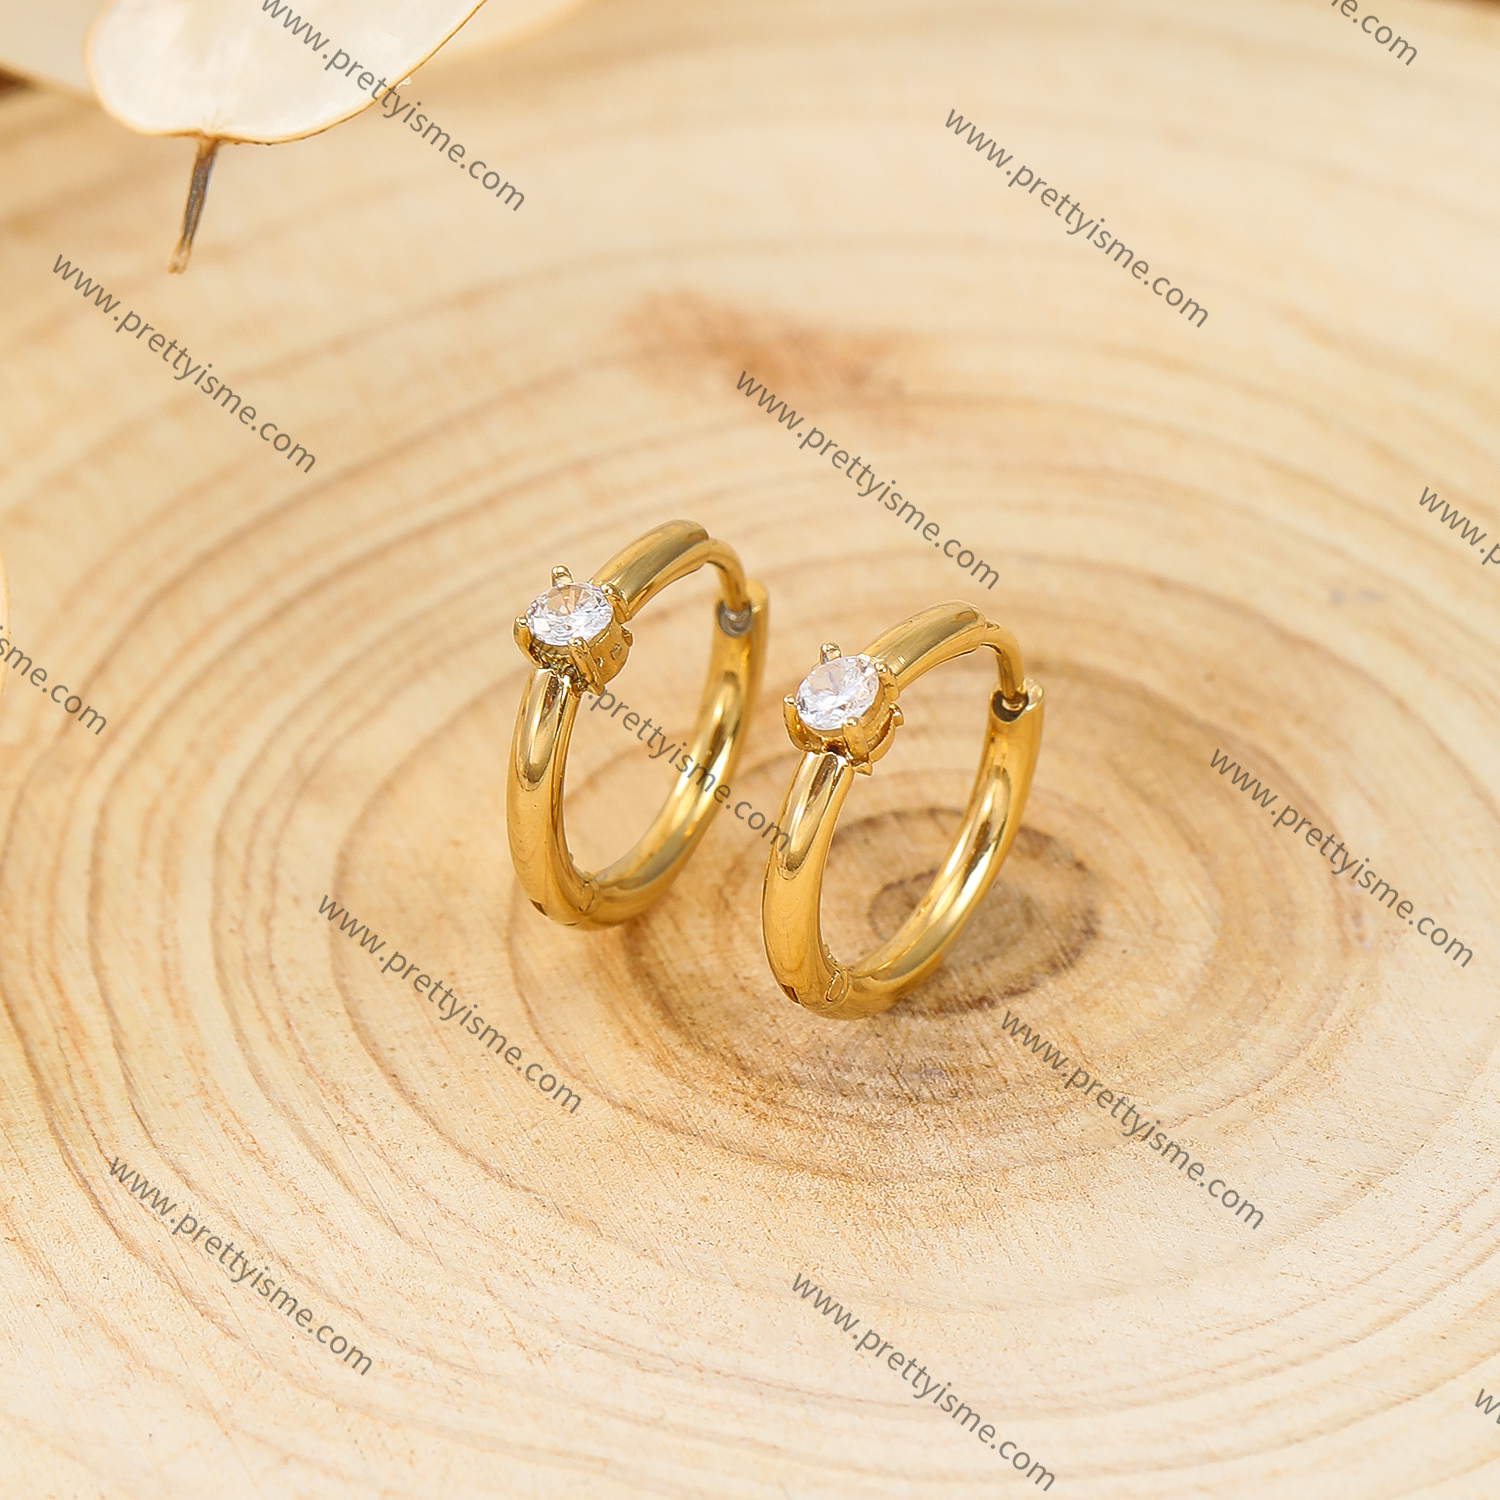 Small Hoop Stainless Steel Earrings Gold Plated 18K Earrings with White Zircons.webp